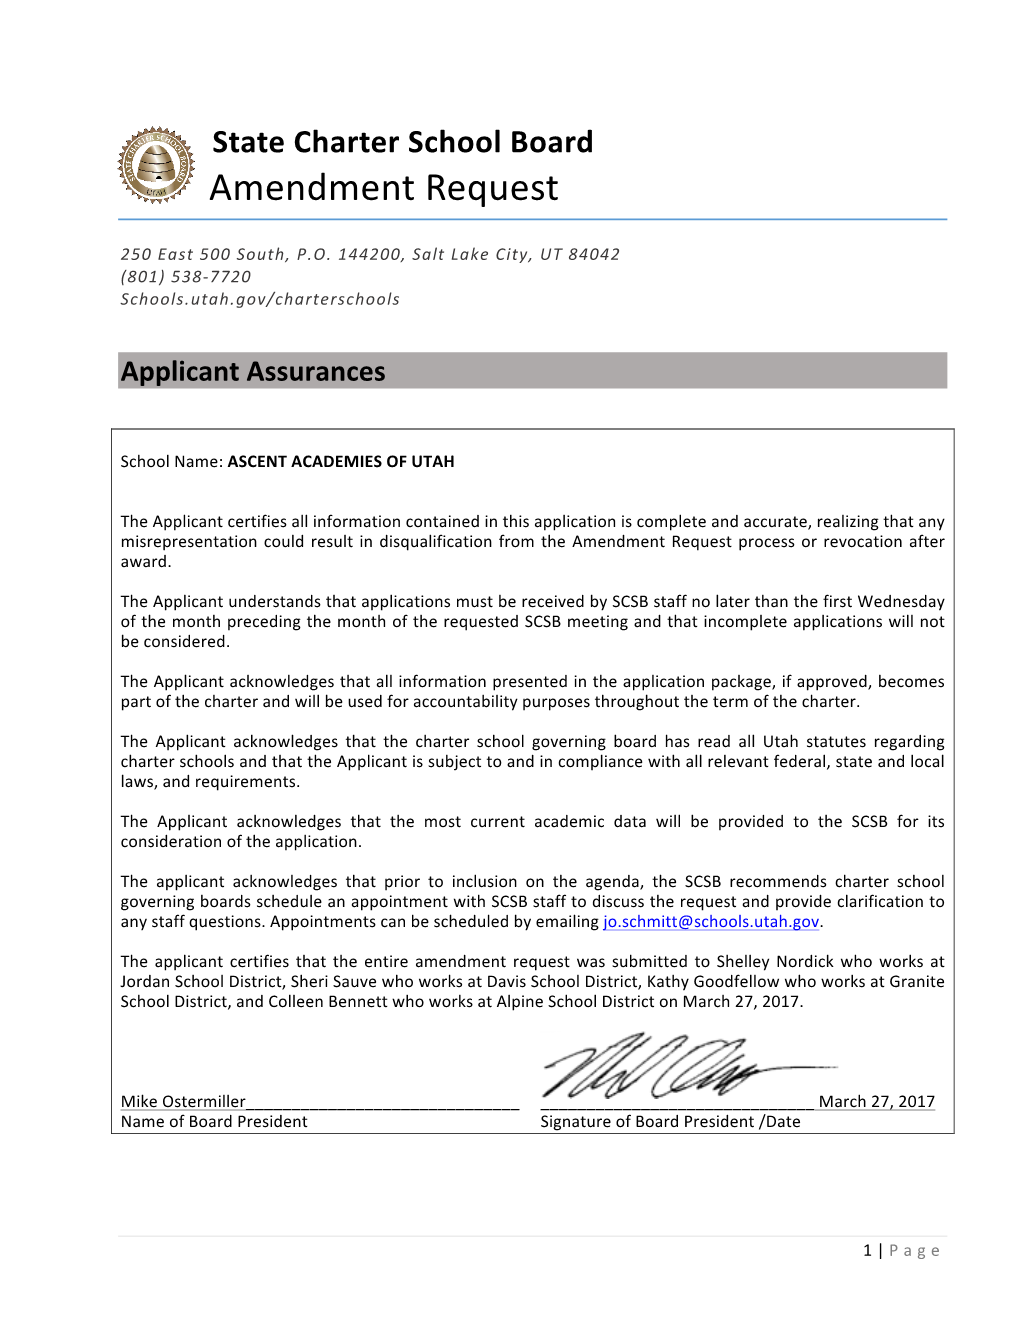 Amendment Request